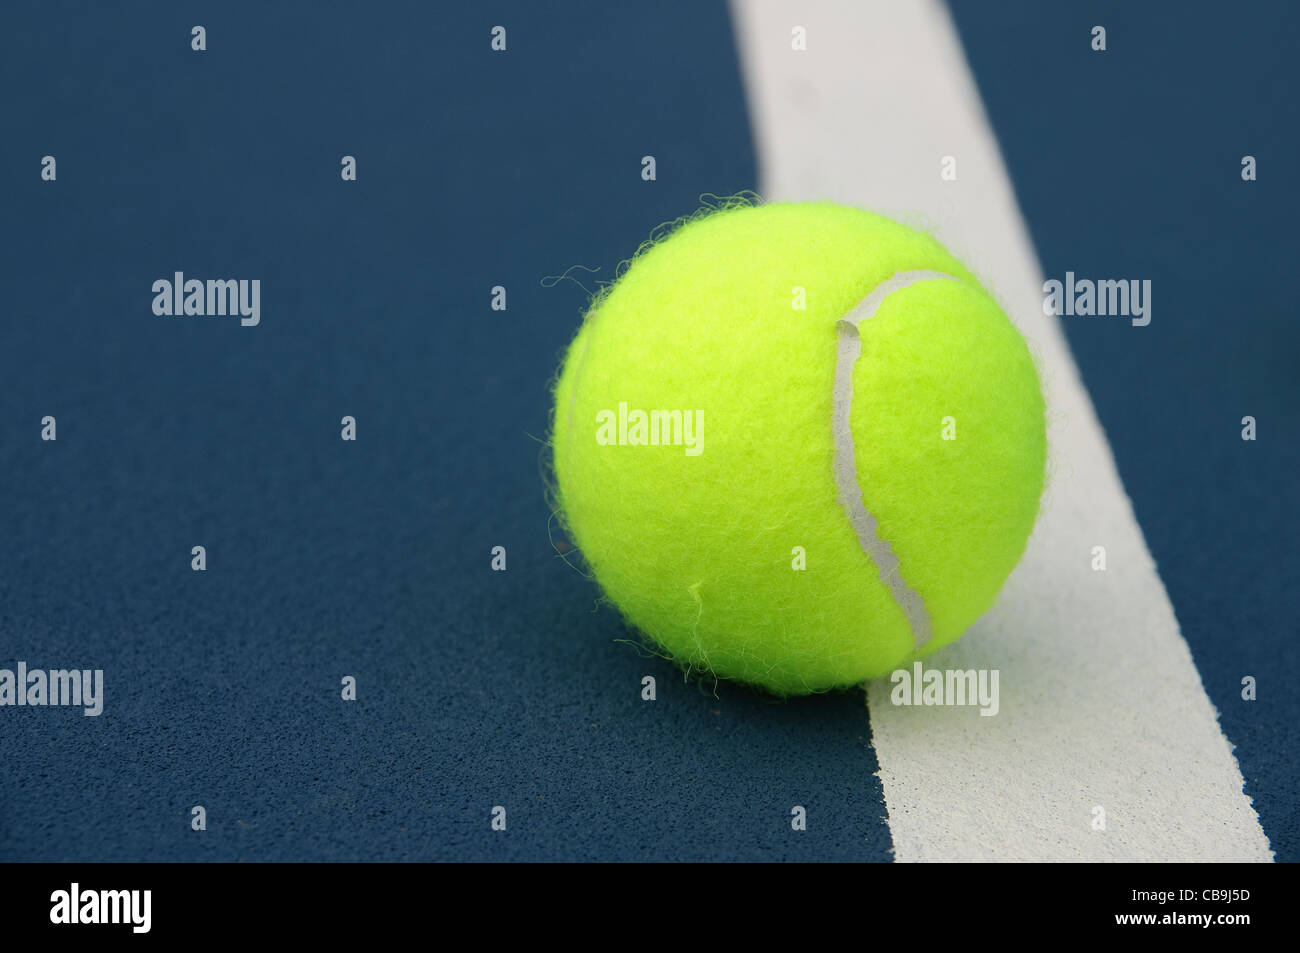 Tennis ball touching the line Stock Photo - Alamy